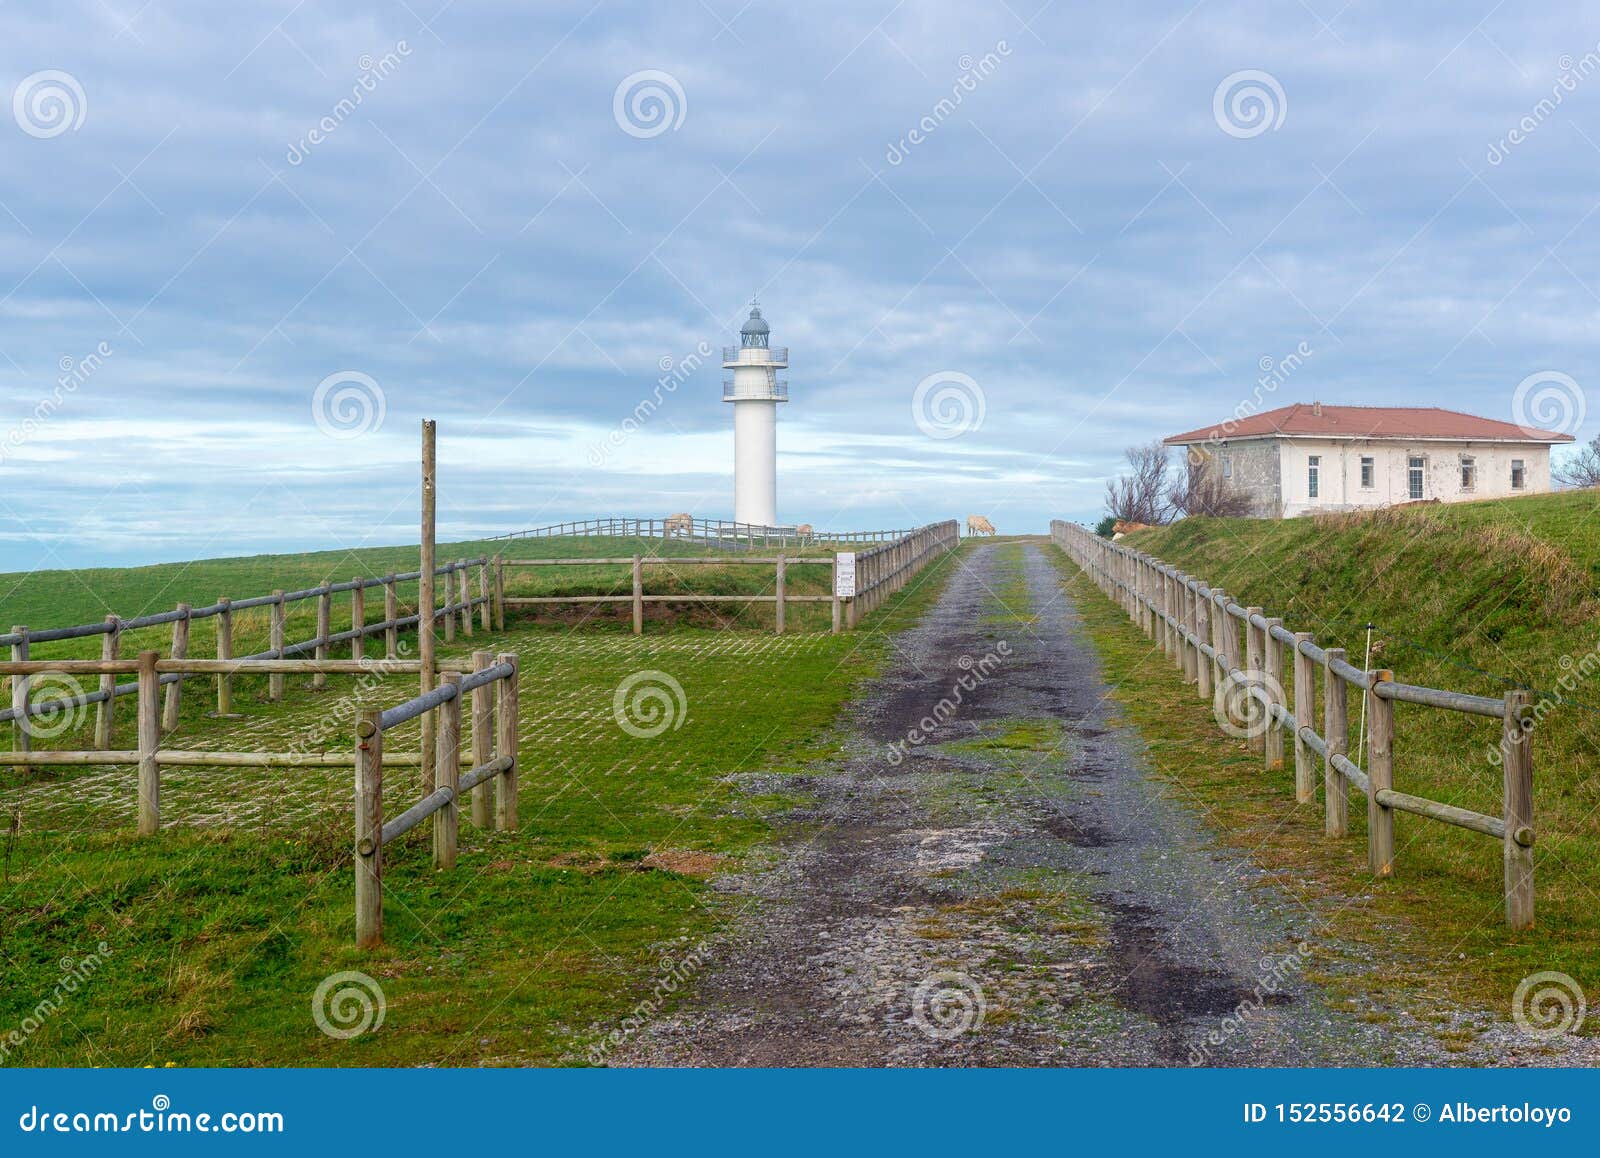 lighthouse of ajo cape, cantabria, spain